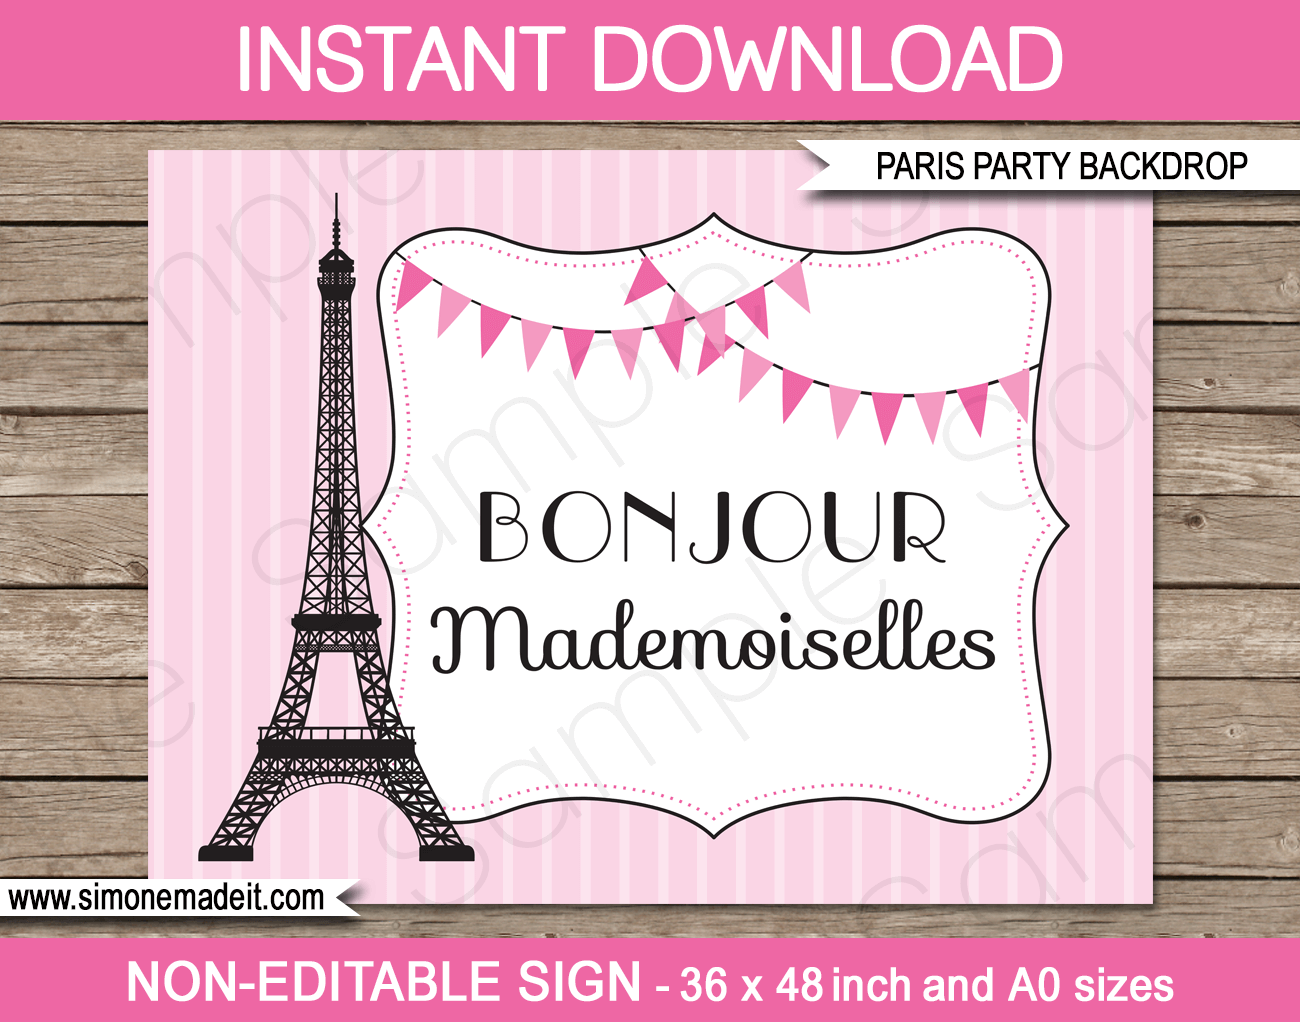 Printable Paris Party Backdrops - Bonjour Mademoiselles | Printable DIY Template | Party Decorations | 36x48 inches | A0 | $4.50 Instant Download via SIMONEmadeit.com